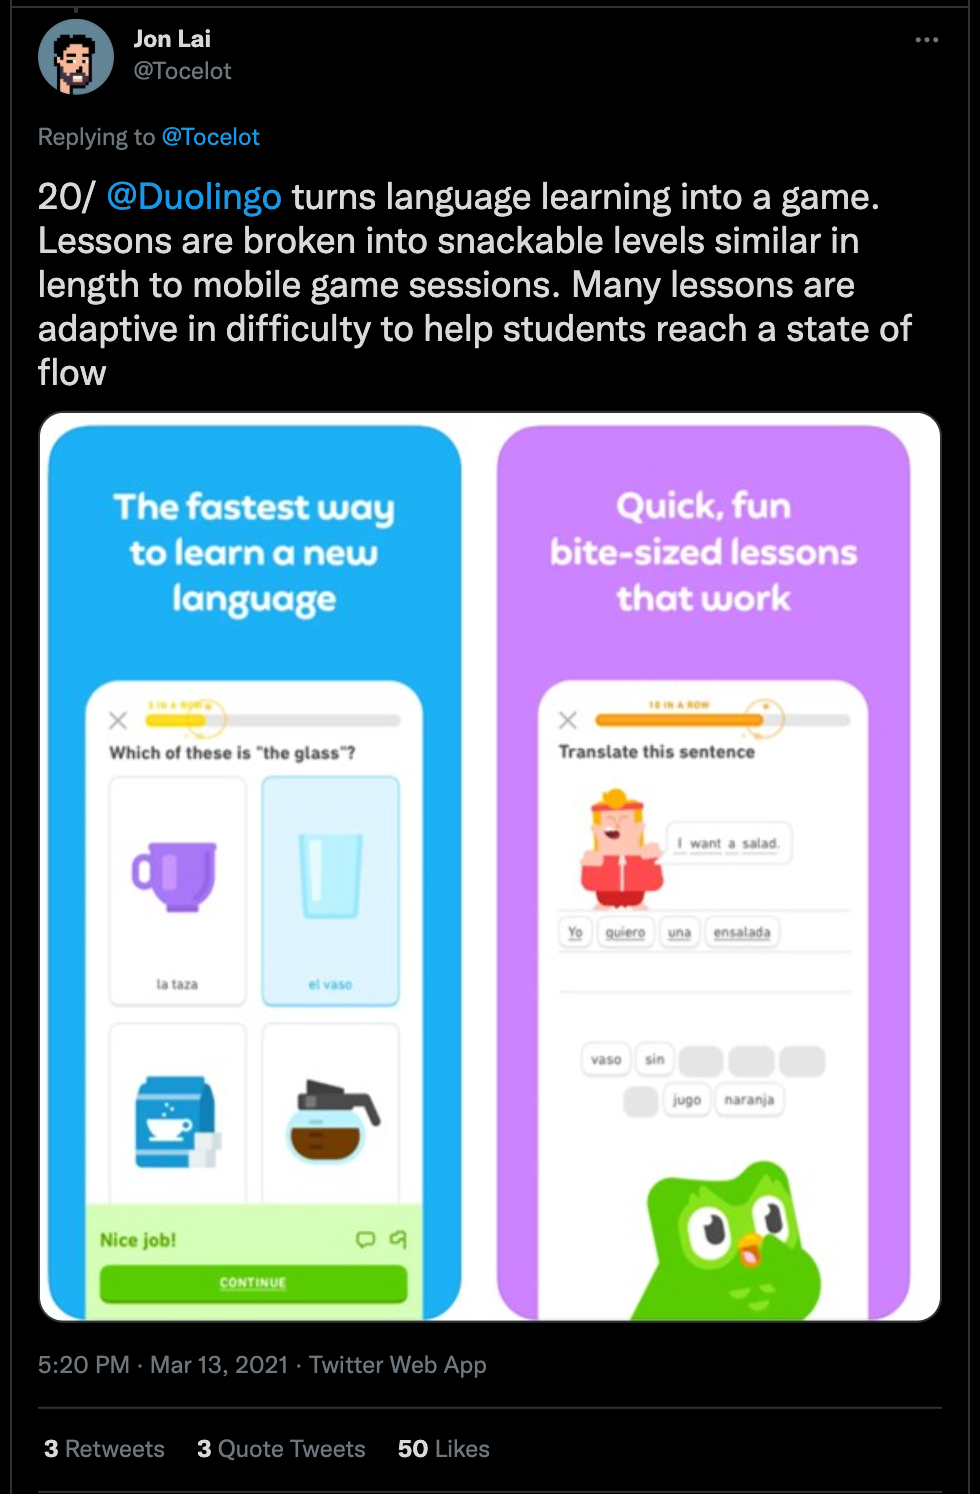 Tweet from Jon Lai, who writes that Duolingo uses gaming elements to make learning fun